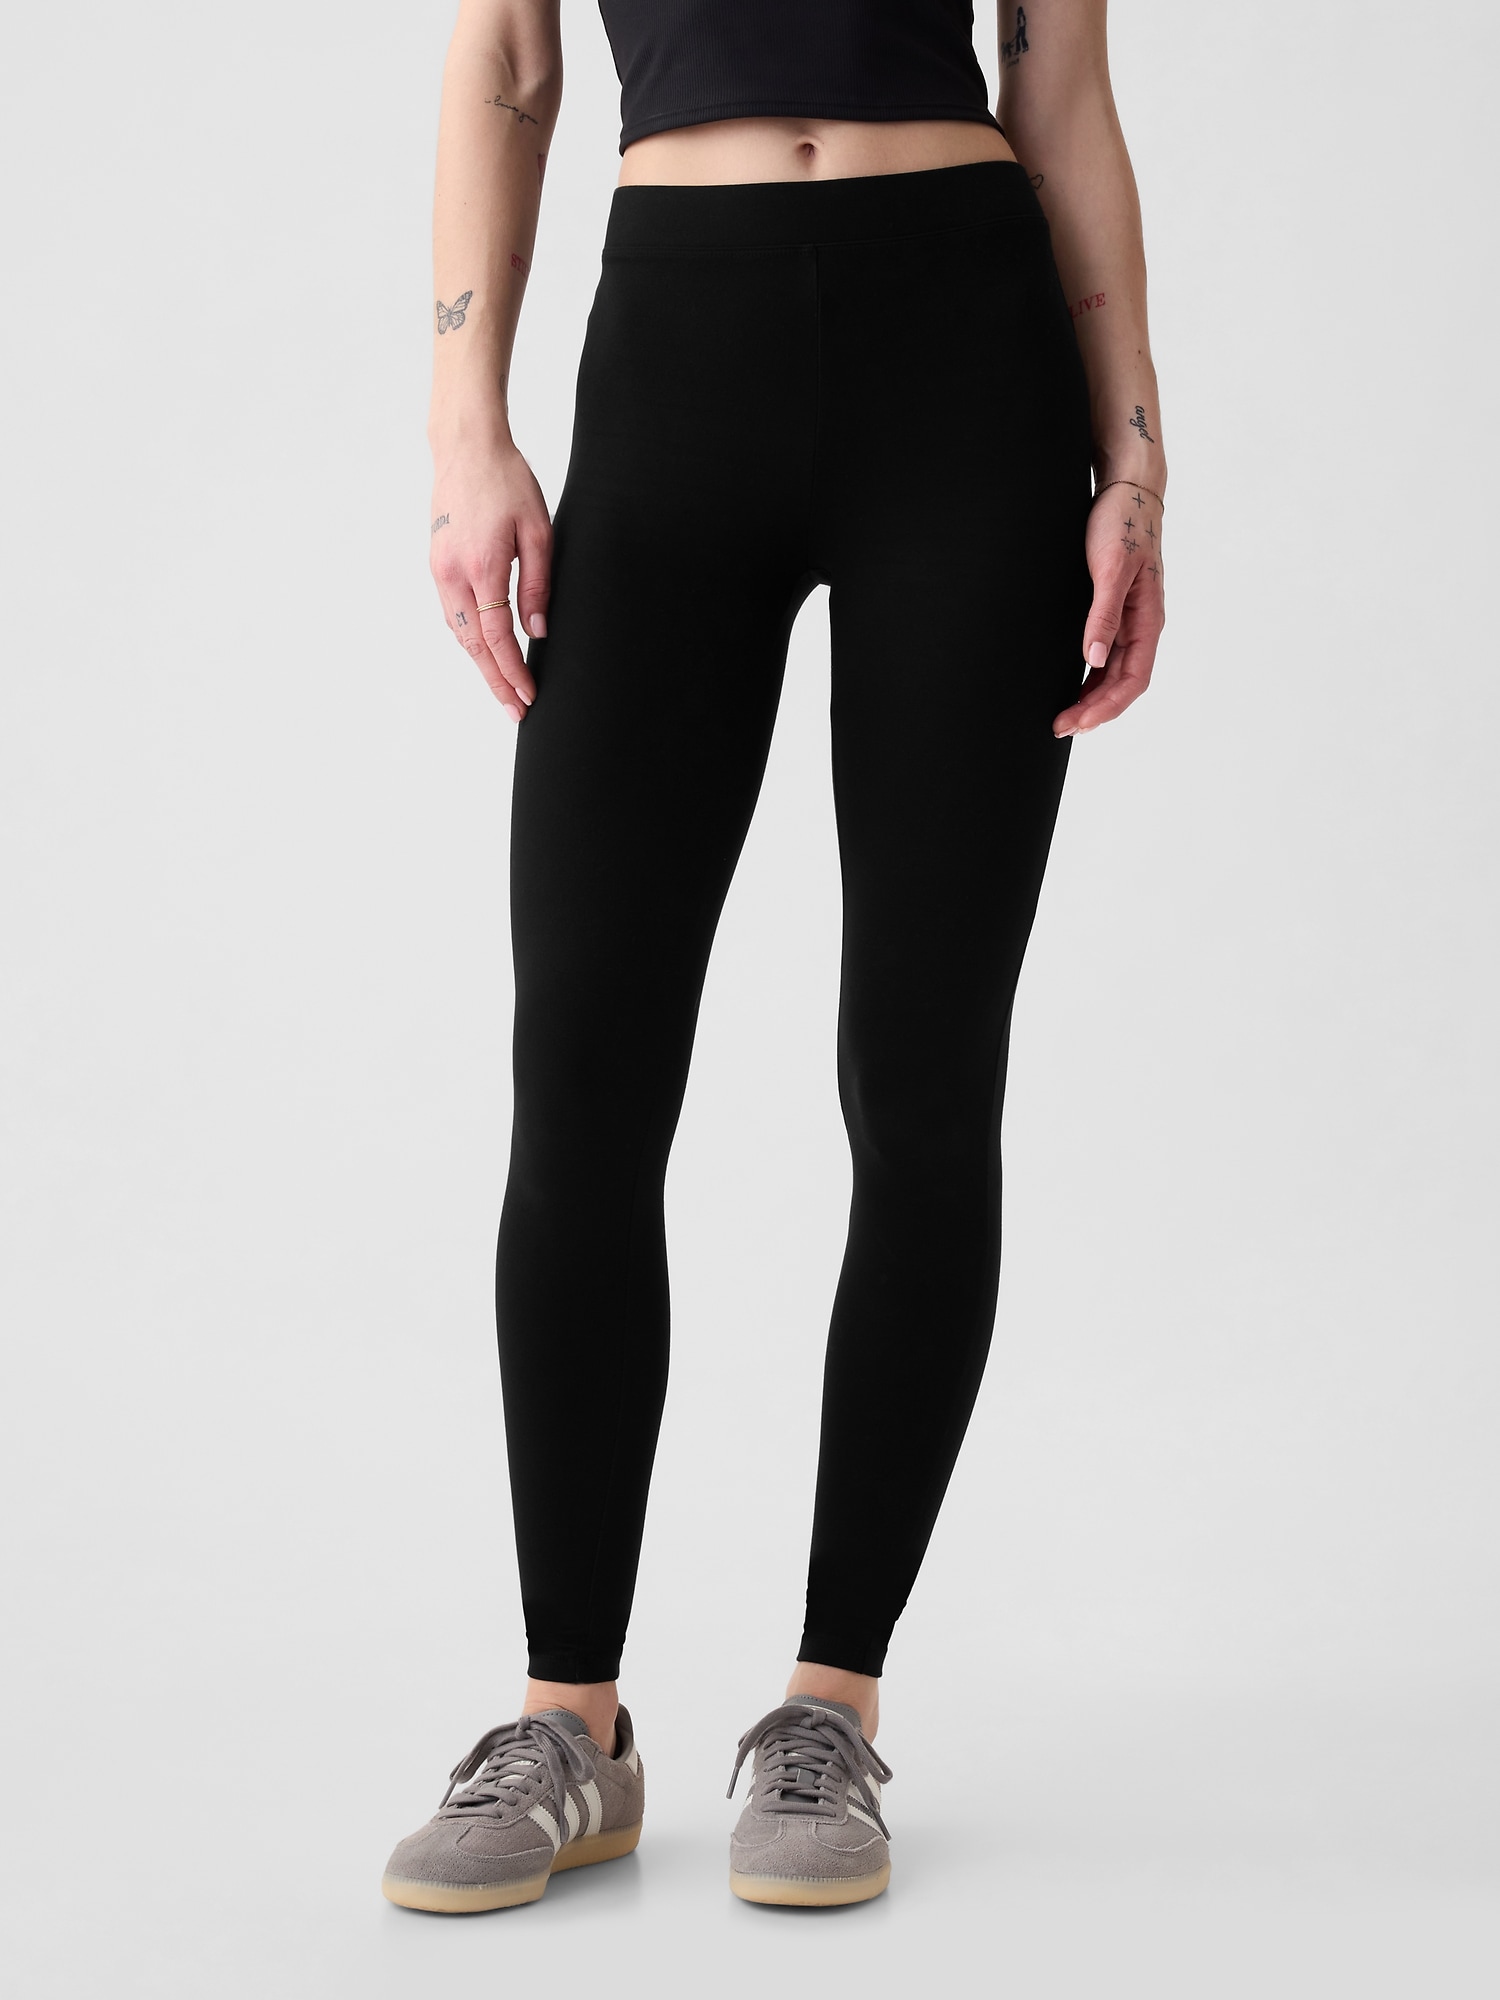 Silky Ladies 1 Pair Plain Everyday Leggings Medium Black : :  Fashion